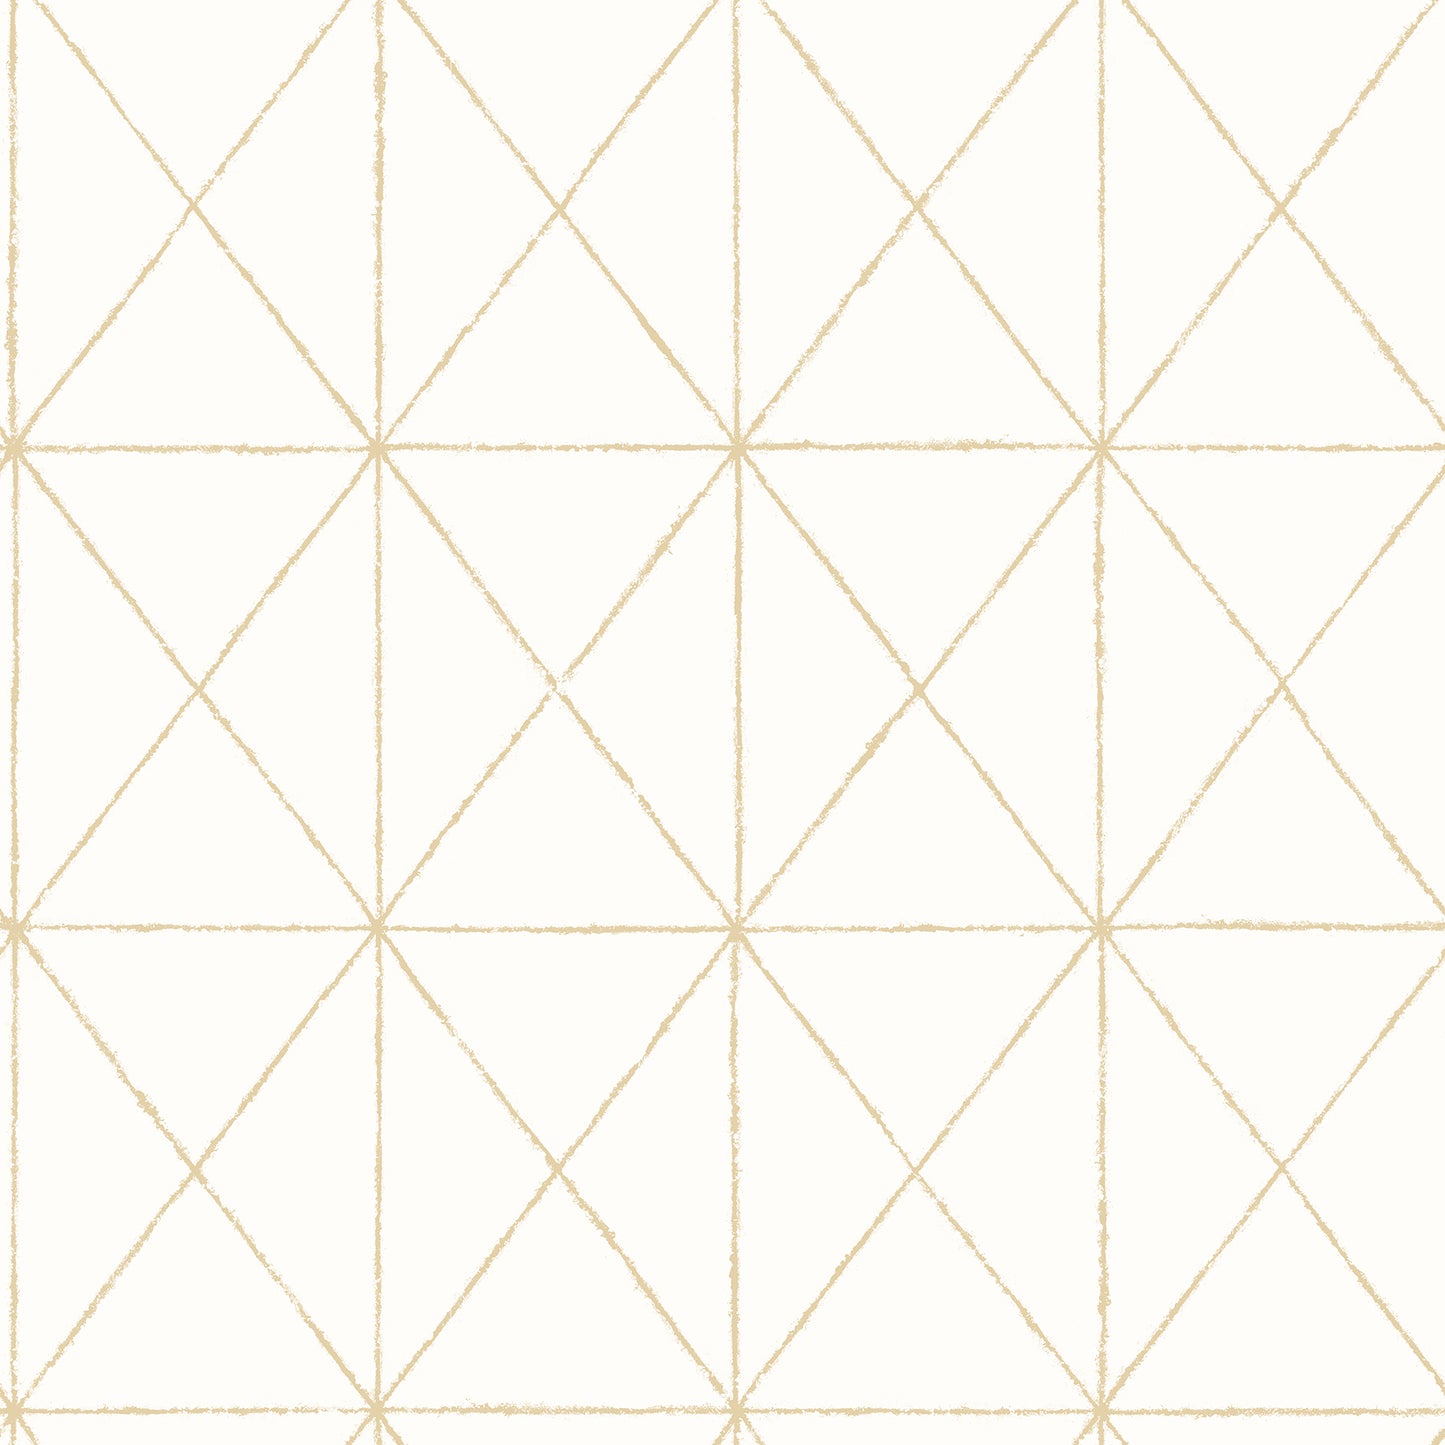 Buy 2697-78002 Intersection Gold Geometric A-Street Prints Wallpaper